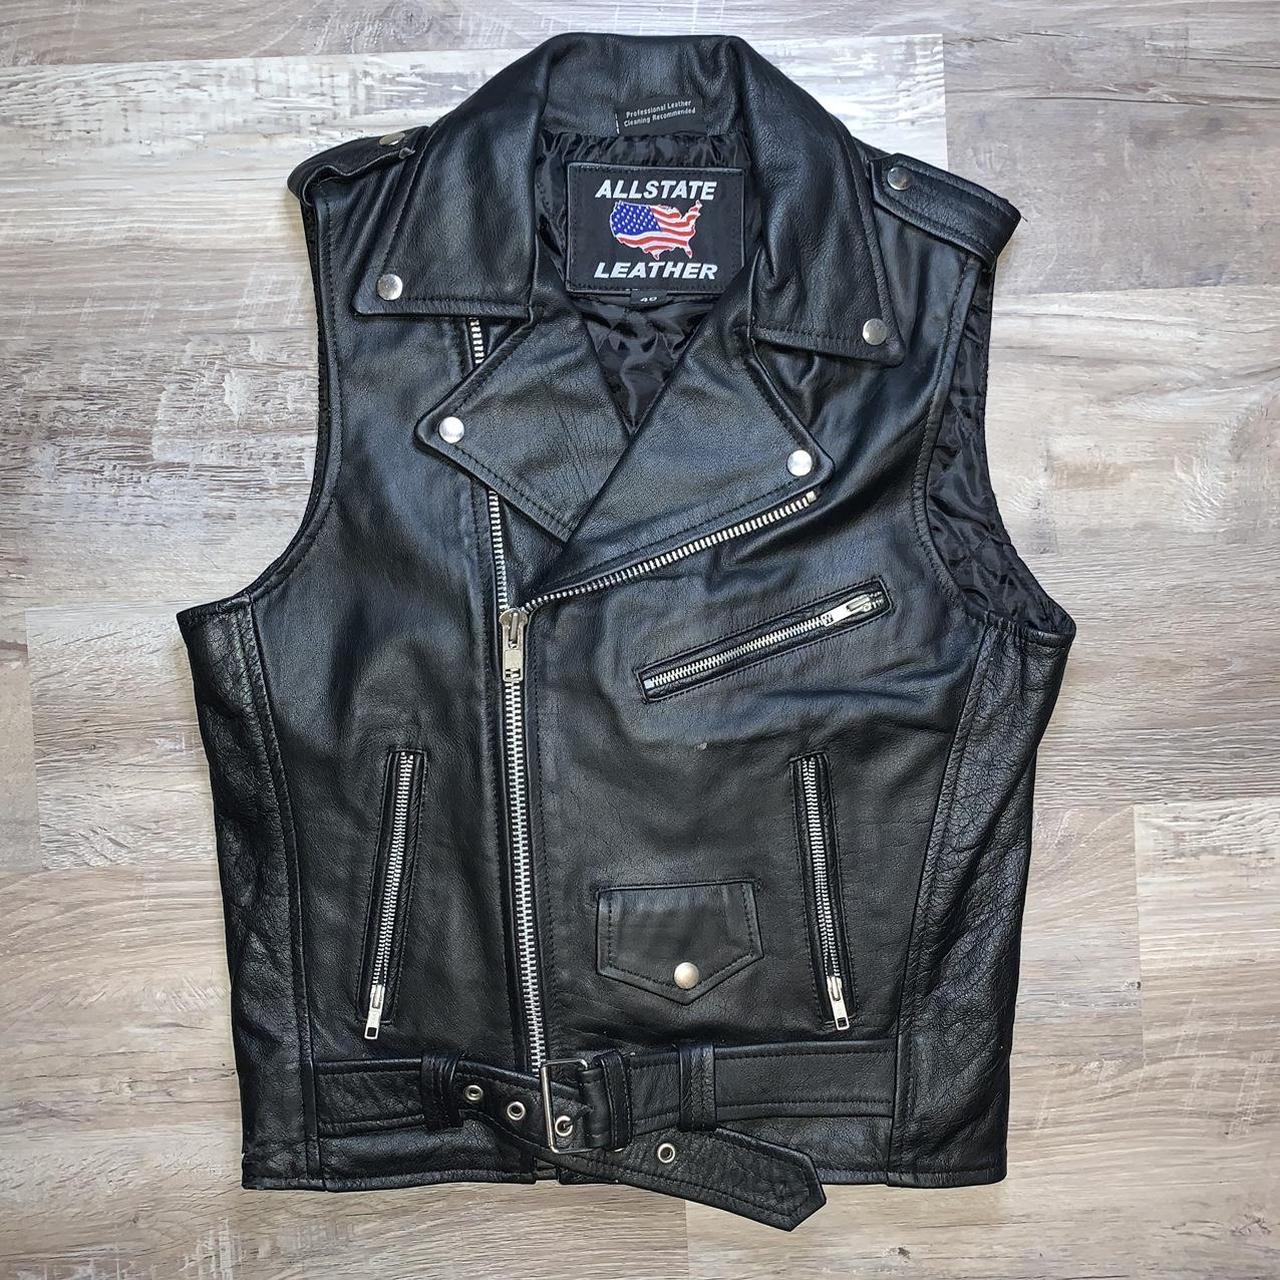 Leather vest VERY HEAVY 100% LEATHER BORDERLINE... - Depop